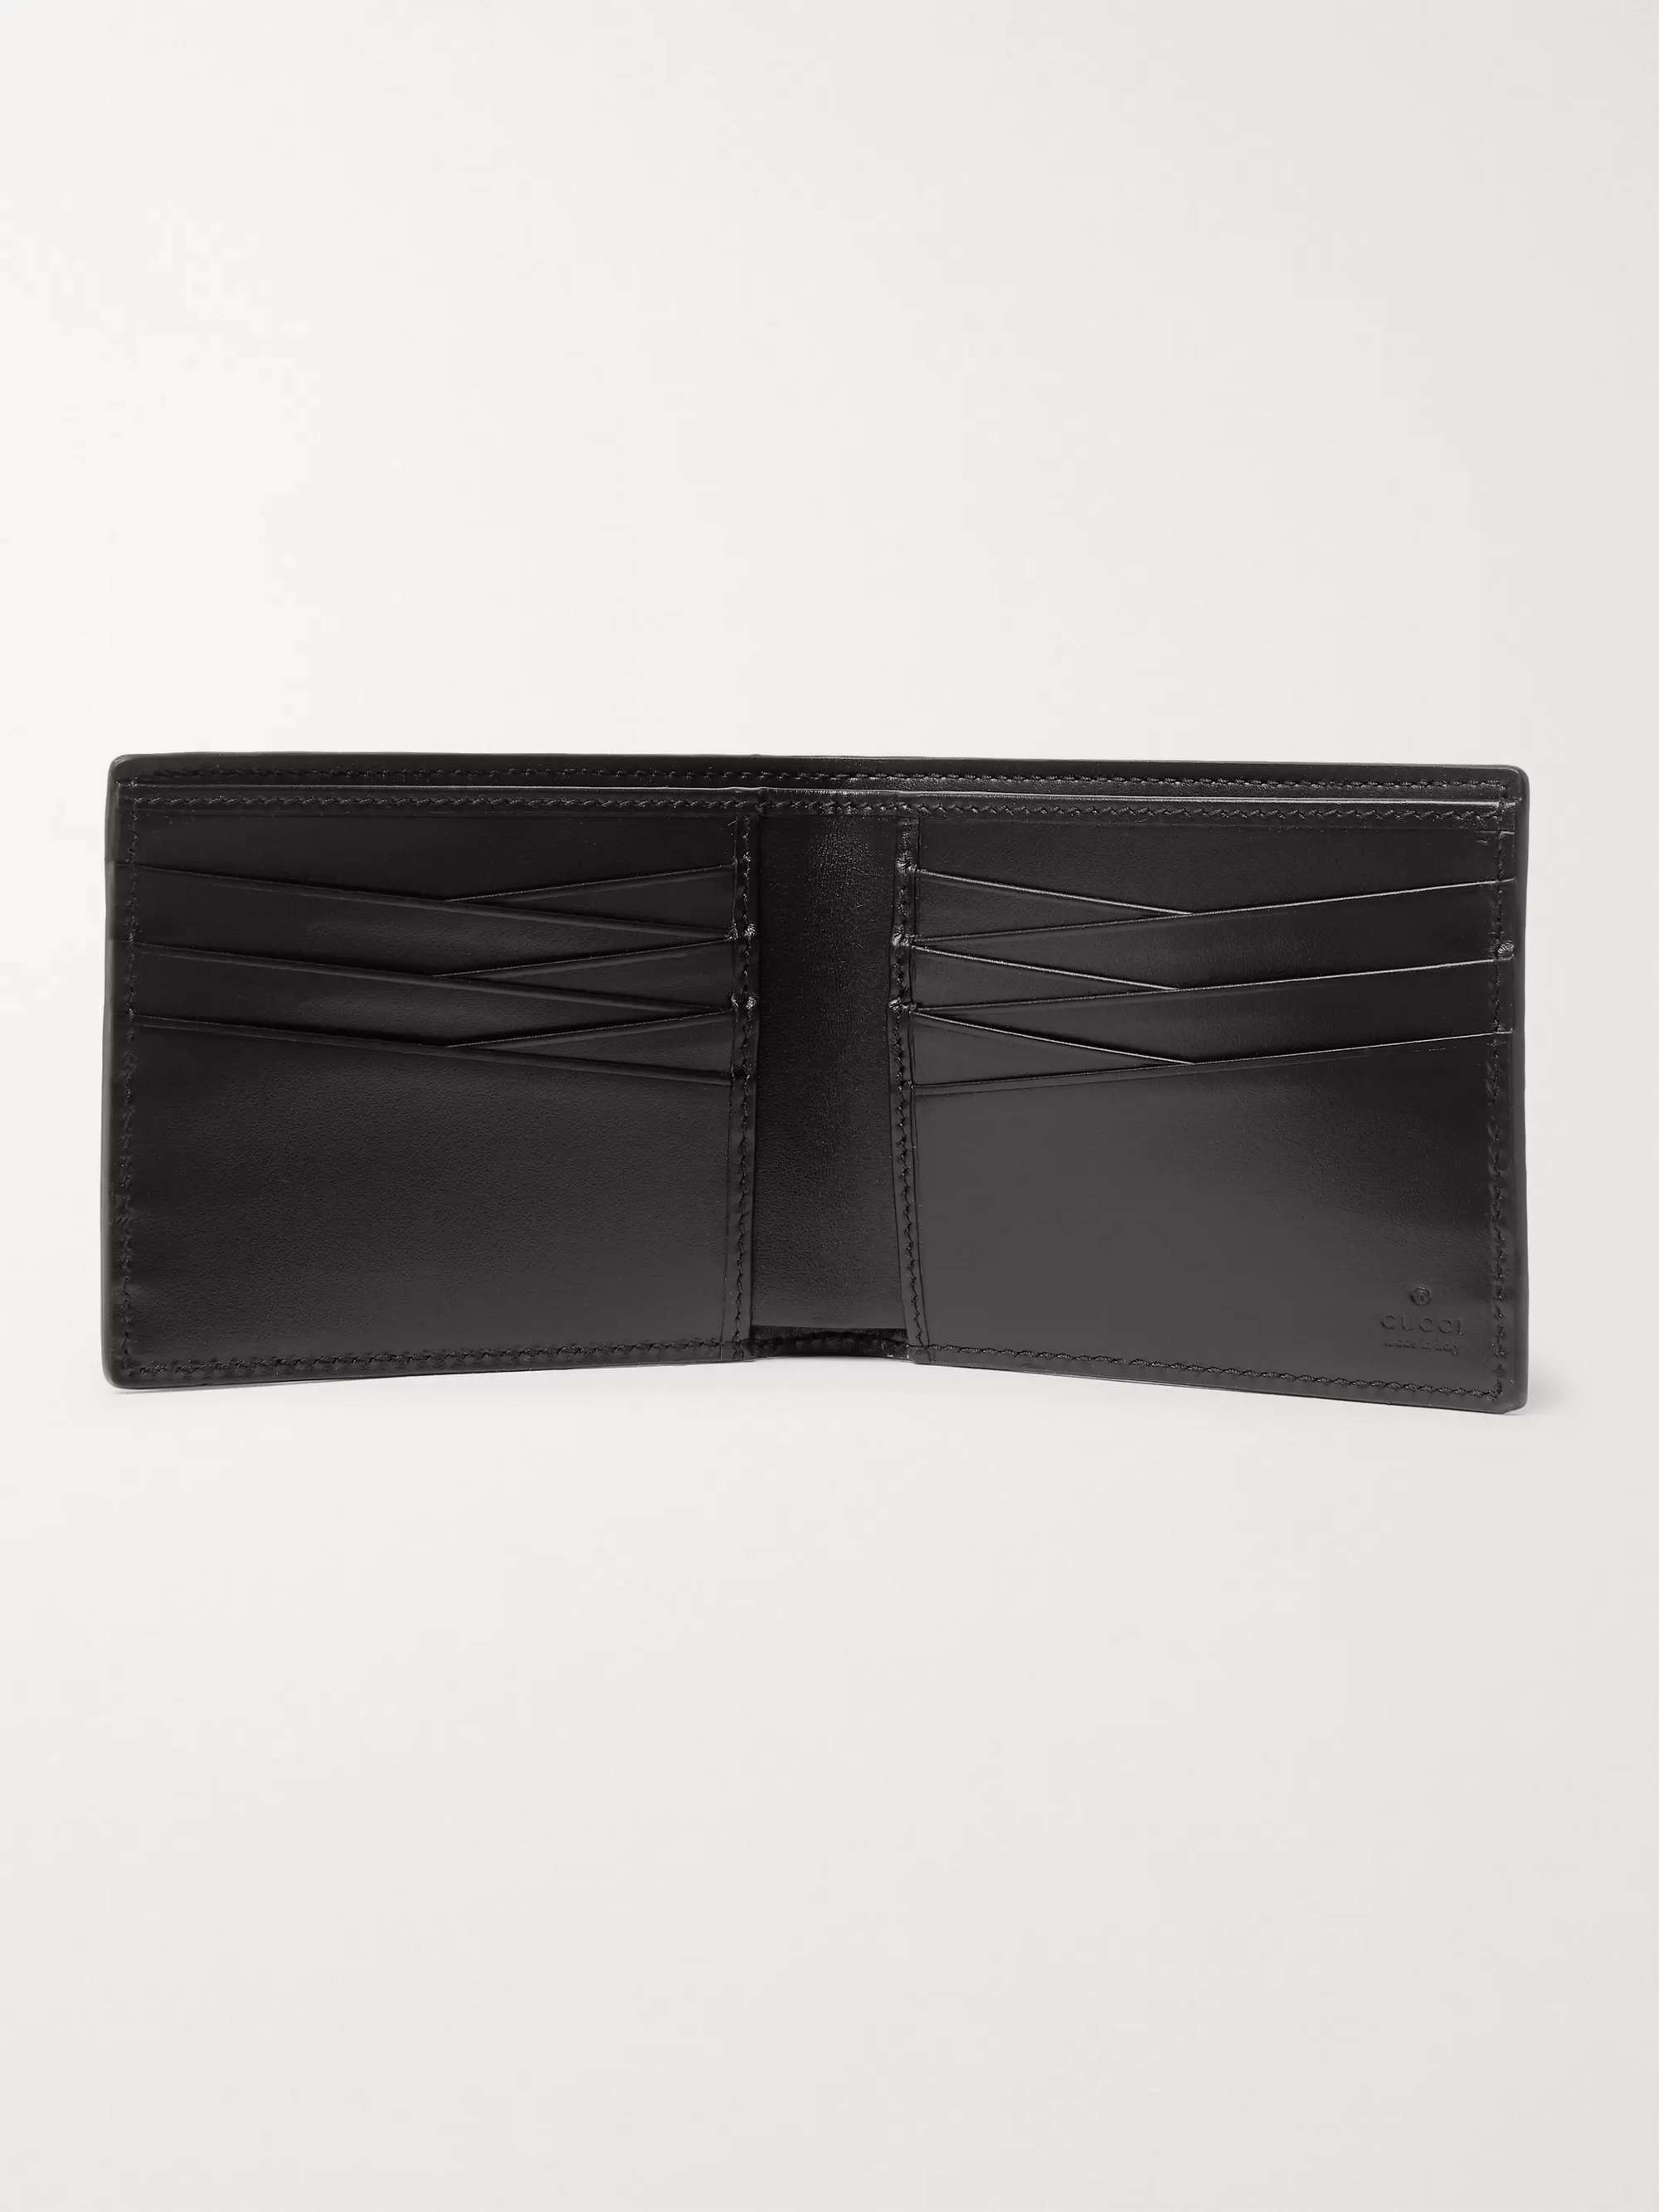 GUCCI GG Tennis Monogrammed-Leather Billfold Wallet